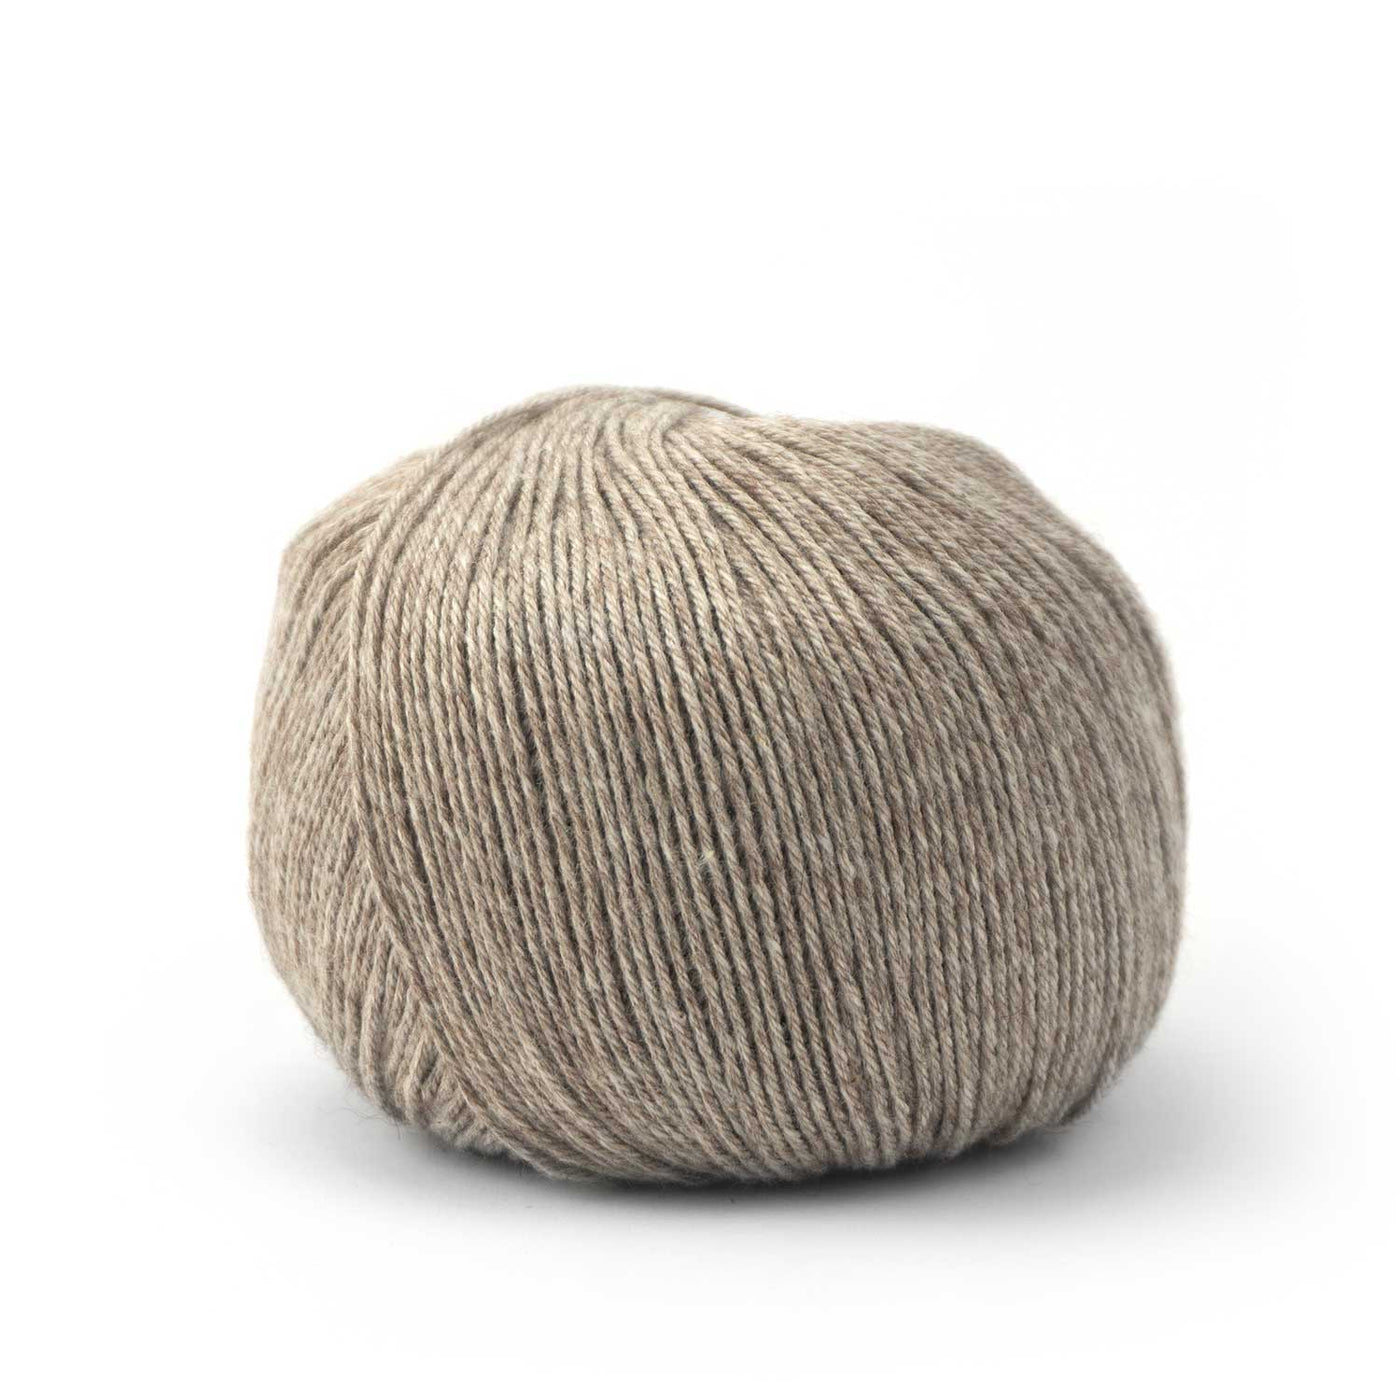 Pascuali Puno Fingering Cotton Alpaca Knitting Yarn